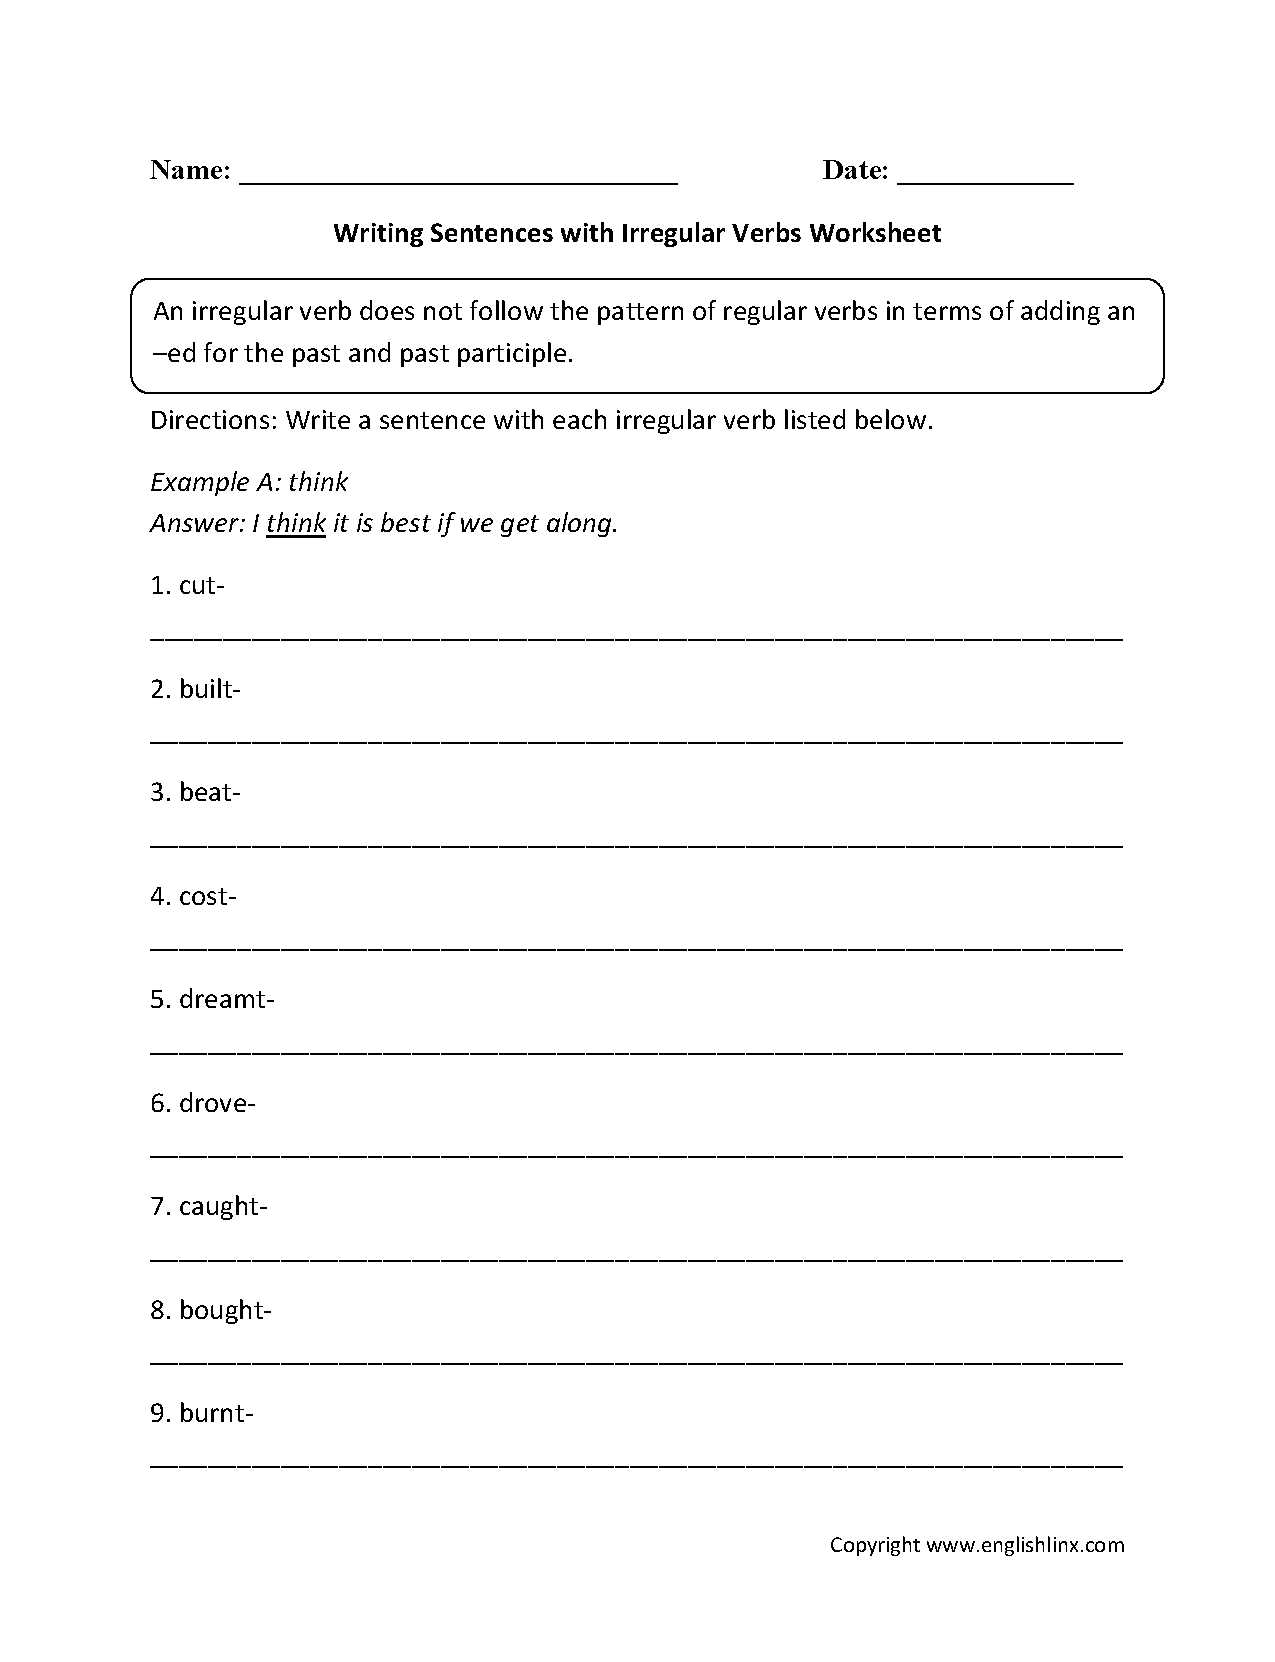 Regular Irregular Verbs Worksheet with Irregular Verbs Worksheets for First Grade